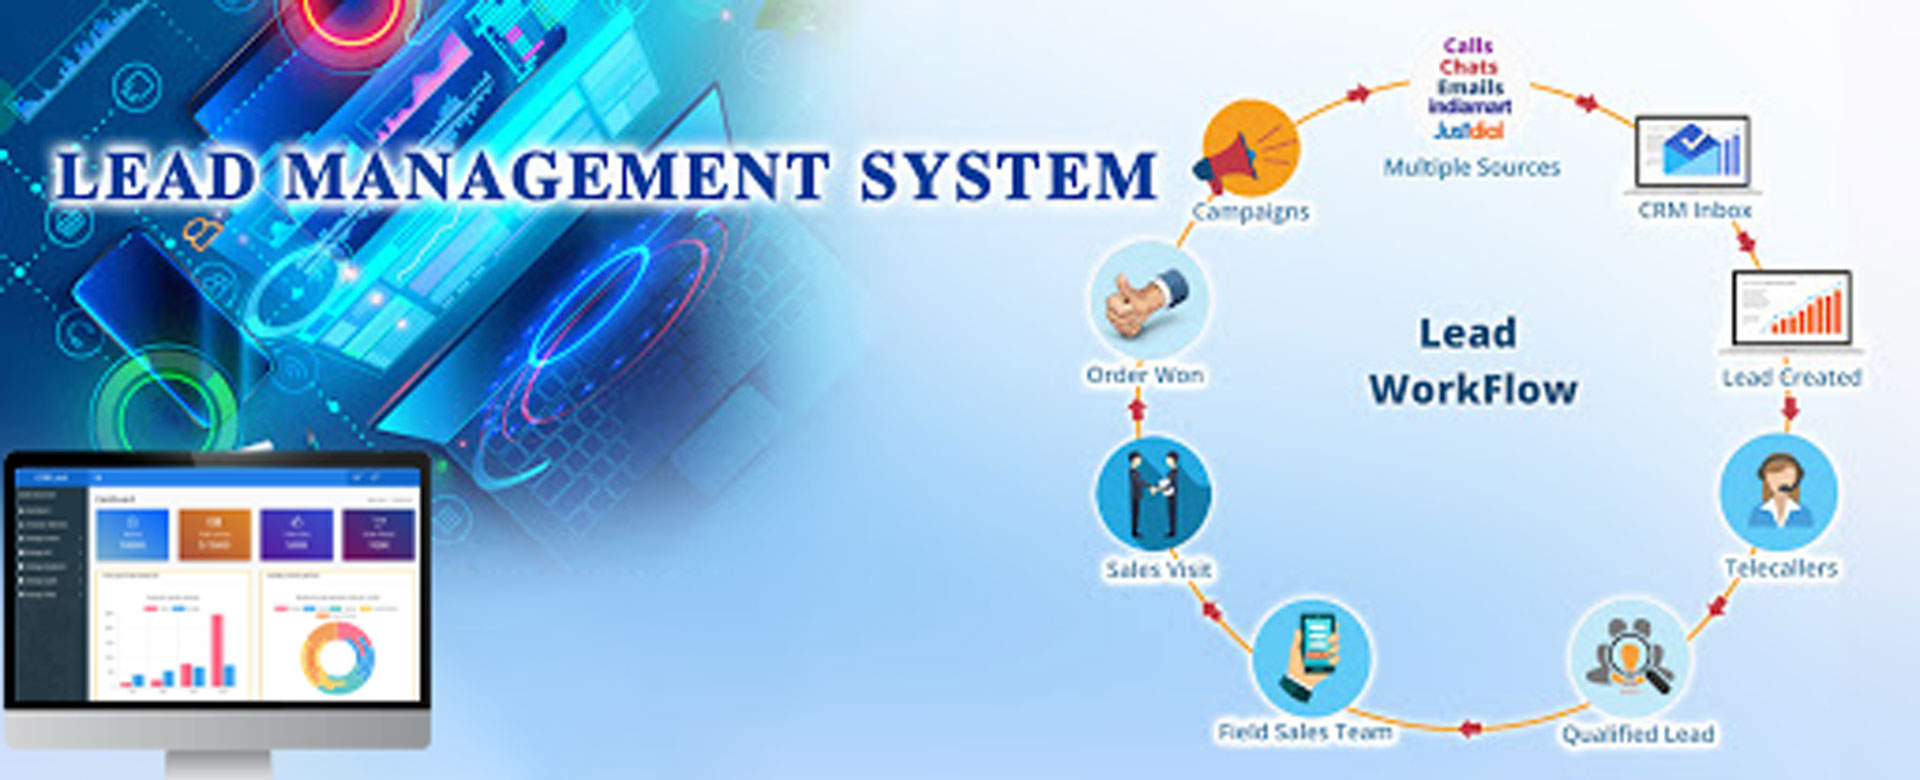 Lead Management System CRM